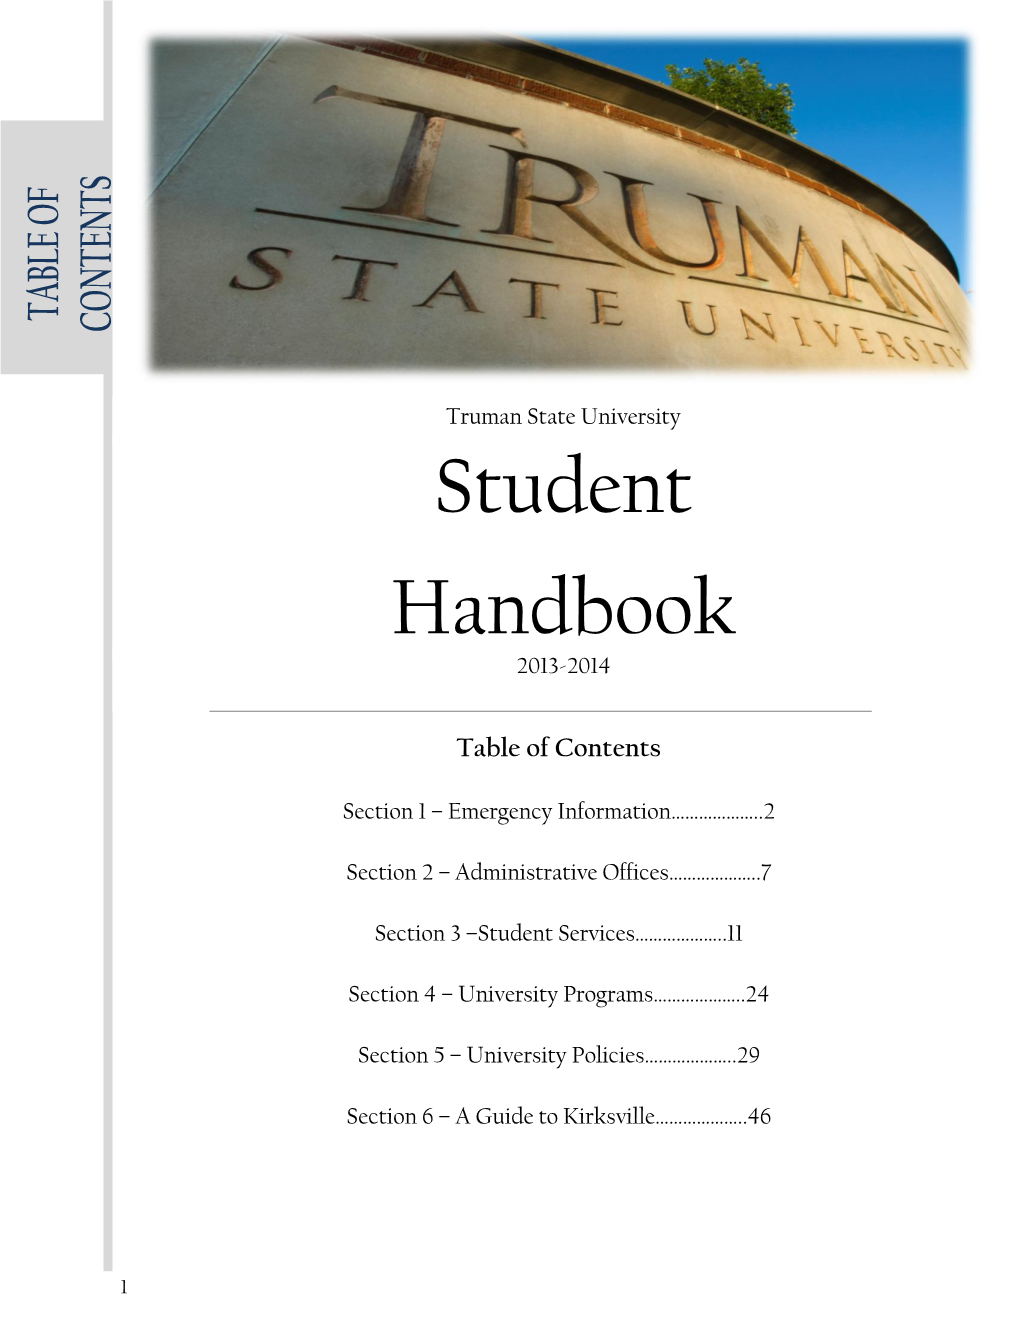 Truman State University Student Handbook